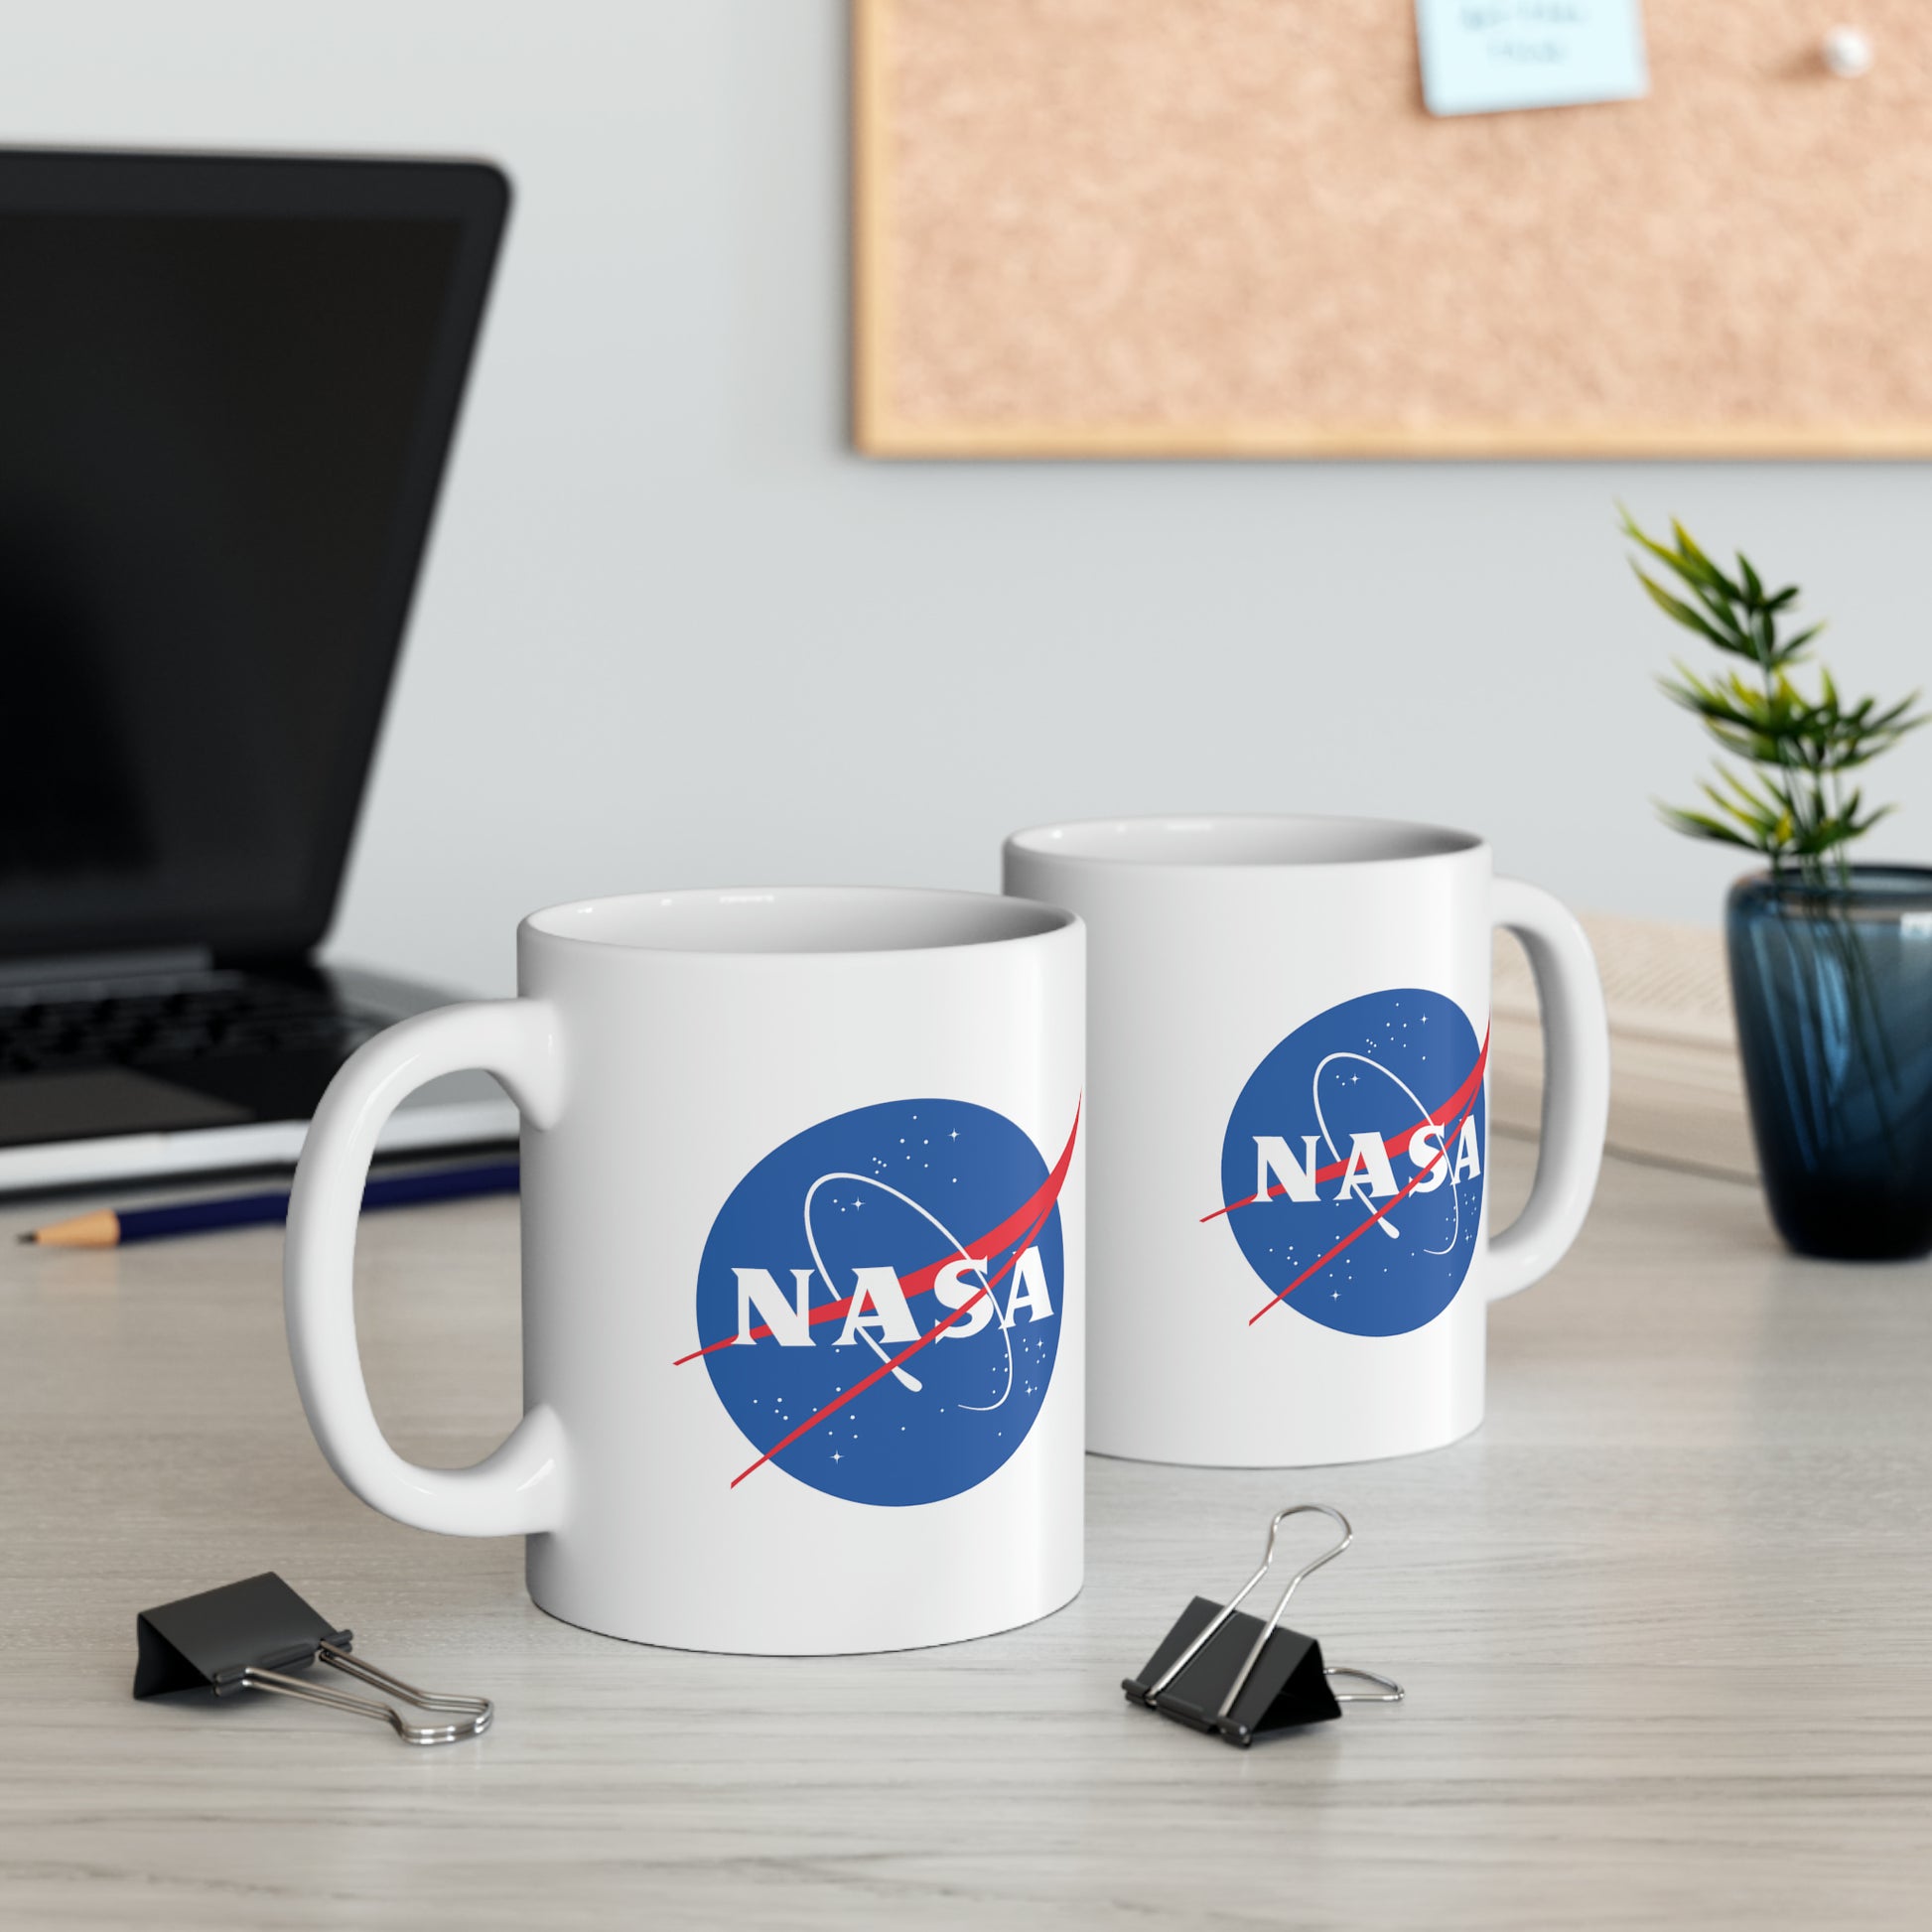 NASA Seal Coffee Mug - Double Sided White Ceramic 11oz by TheGlassyLass.com